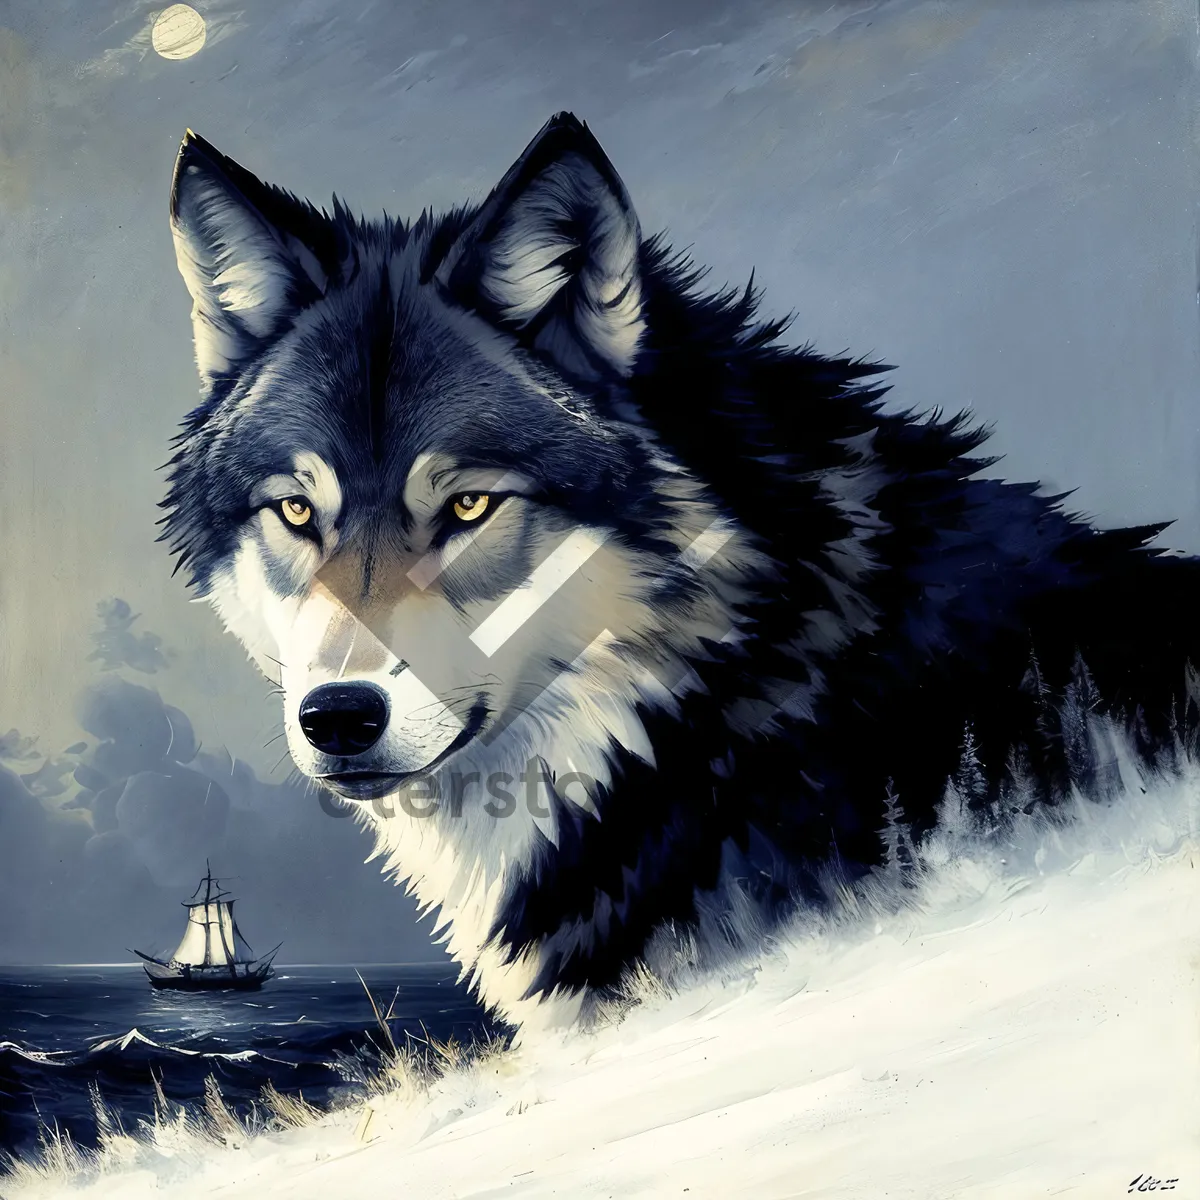 Picture of Majestic Malamute: A Winter Portrait of a Beautiful Sled Dog